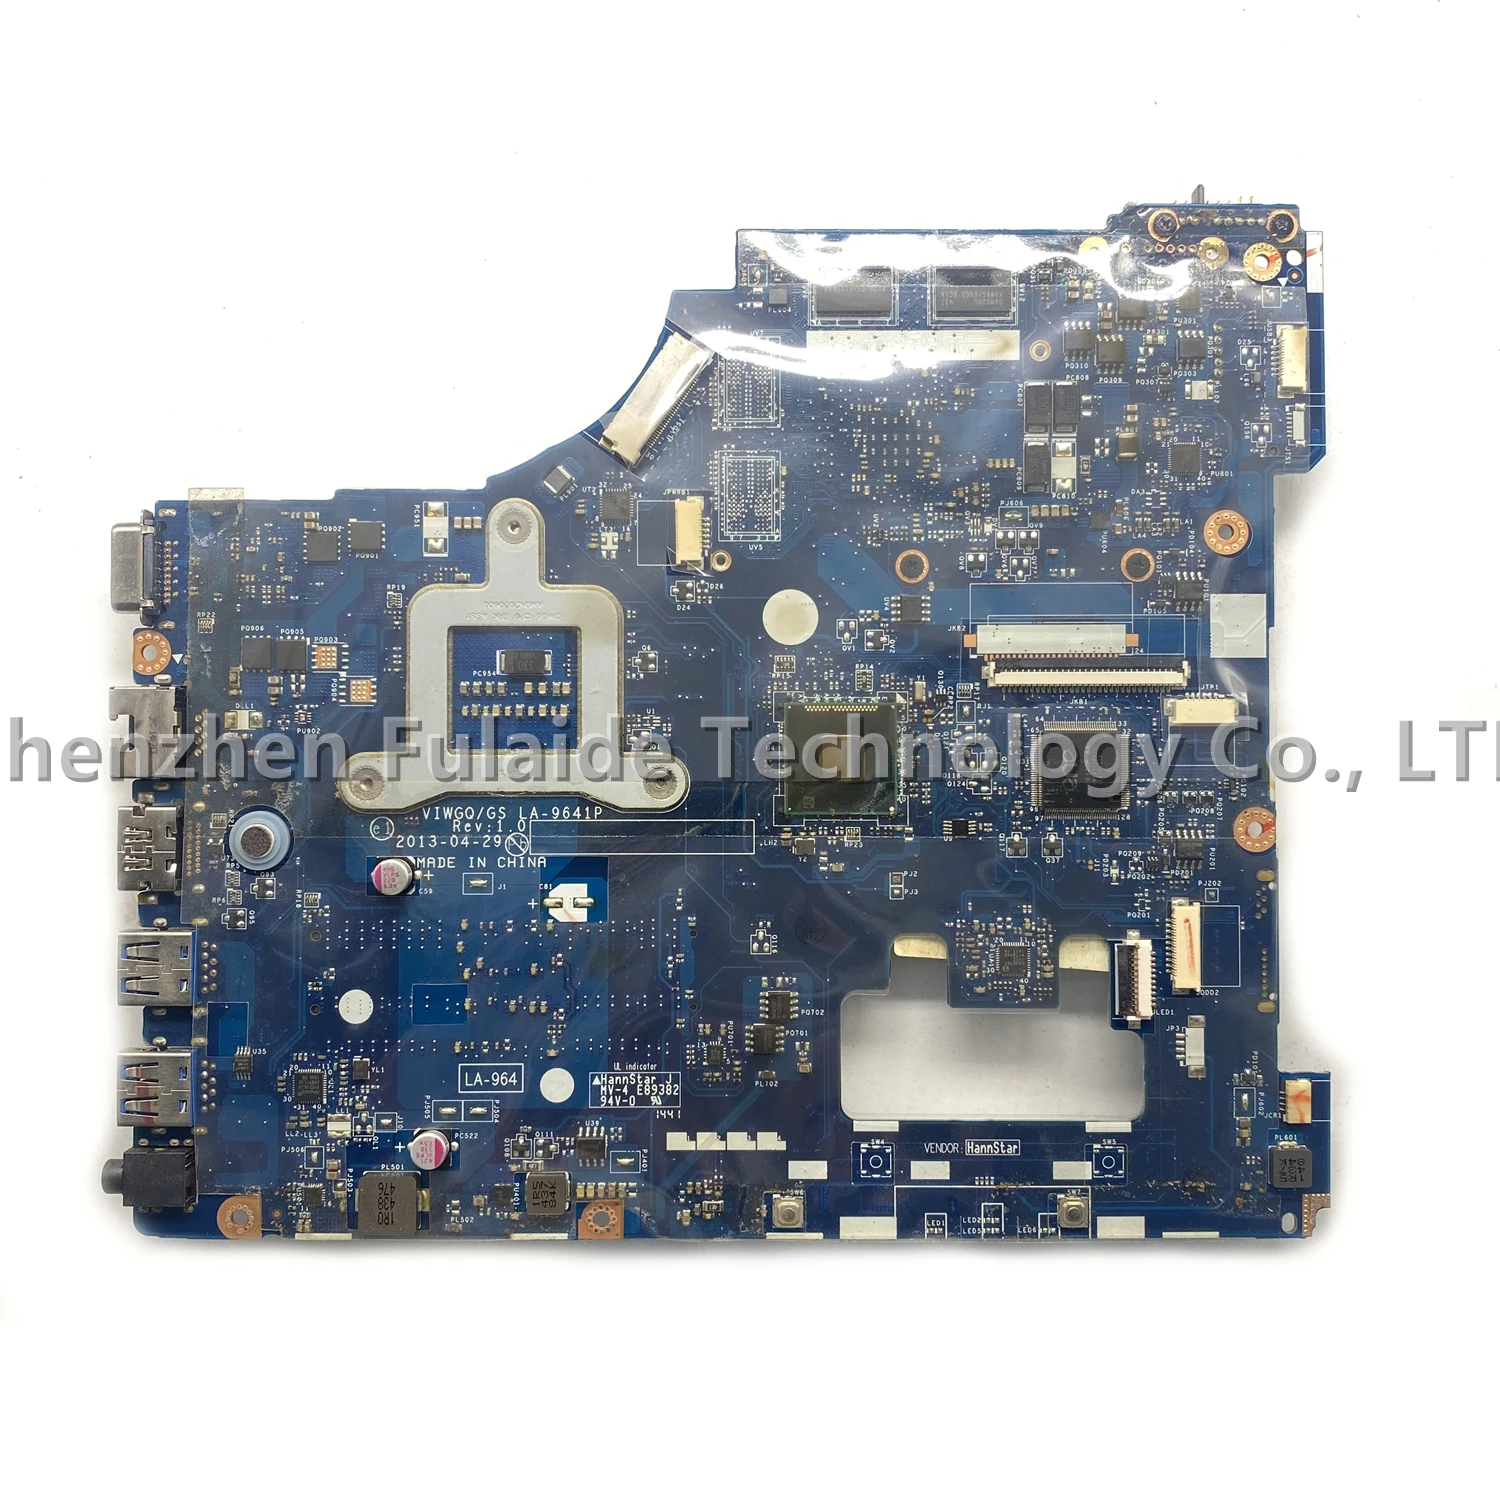 VIWGQ/GS LA-9641P Для Lenovo Ideapad G510 15-Дюймовый Ноутбук Материнская Плата С HD8750M/R5 M230 2 ГБ/R7 M265 2 ГБ GPU DDR3 100% Работа